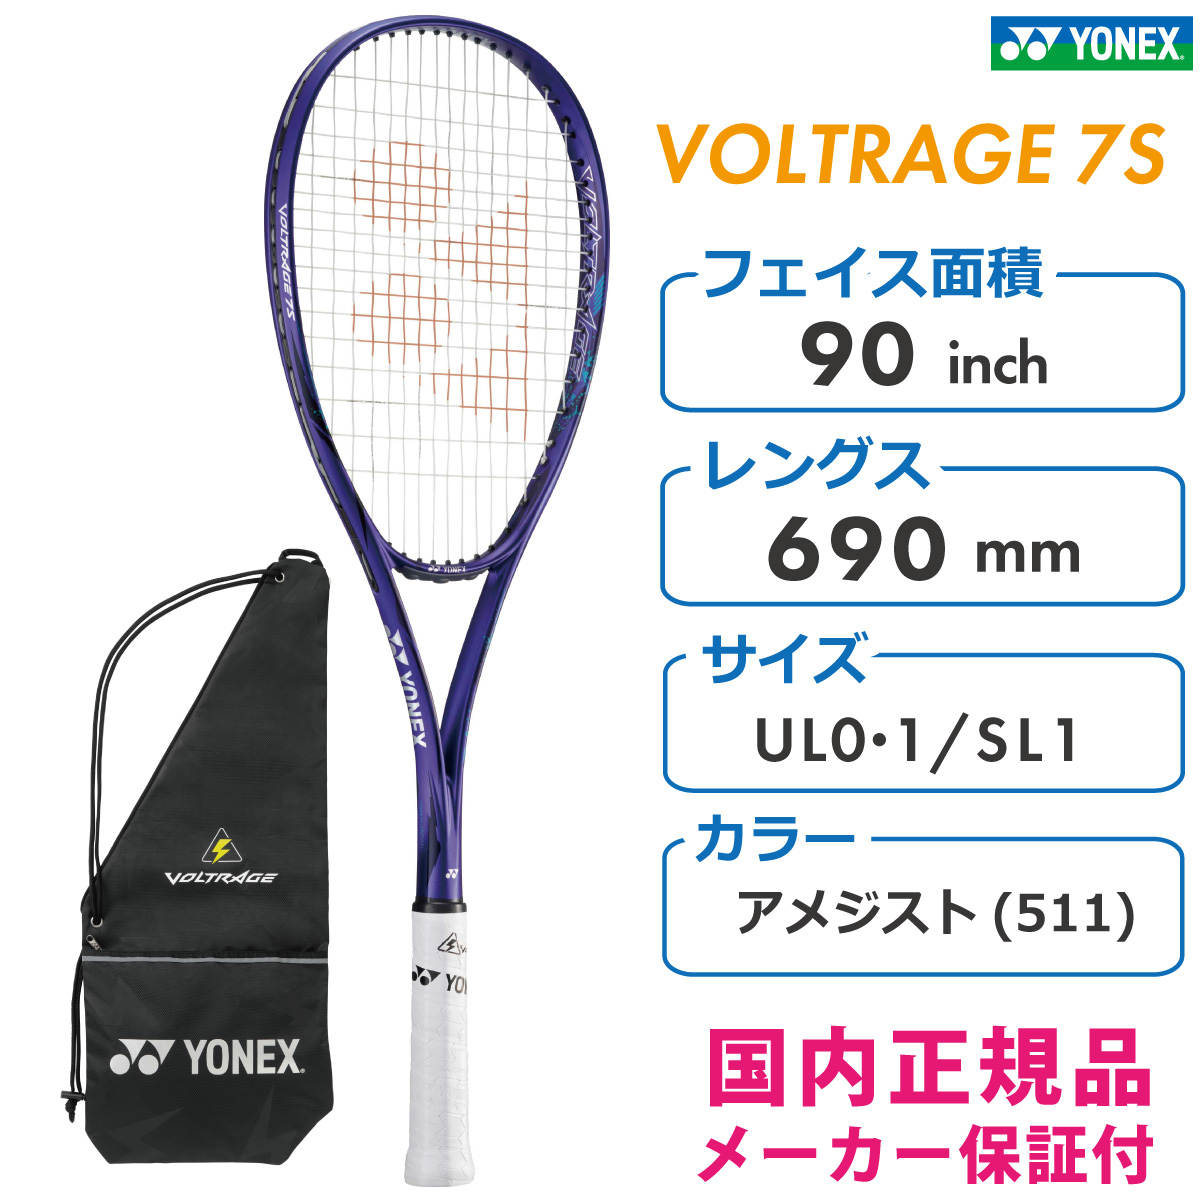 YONEX ボルトレイジ7S VOLTRAGE7S ソフトテニス ラケット VR7S